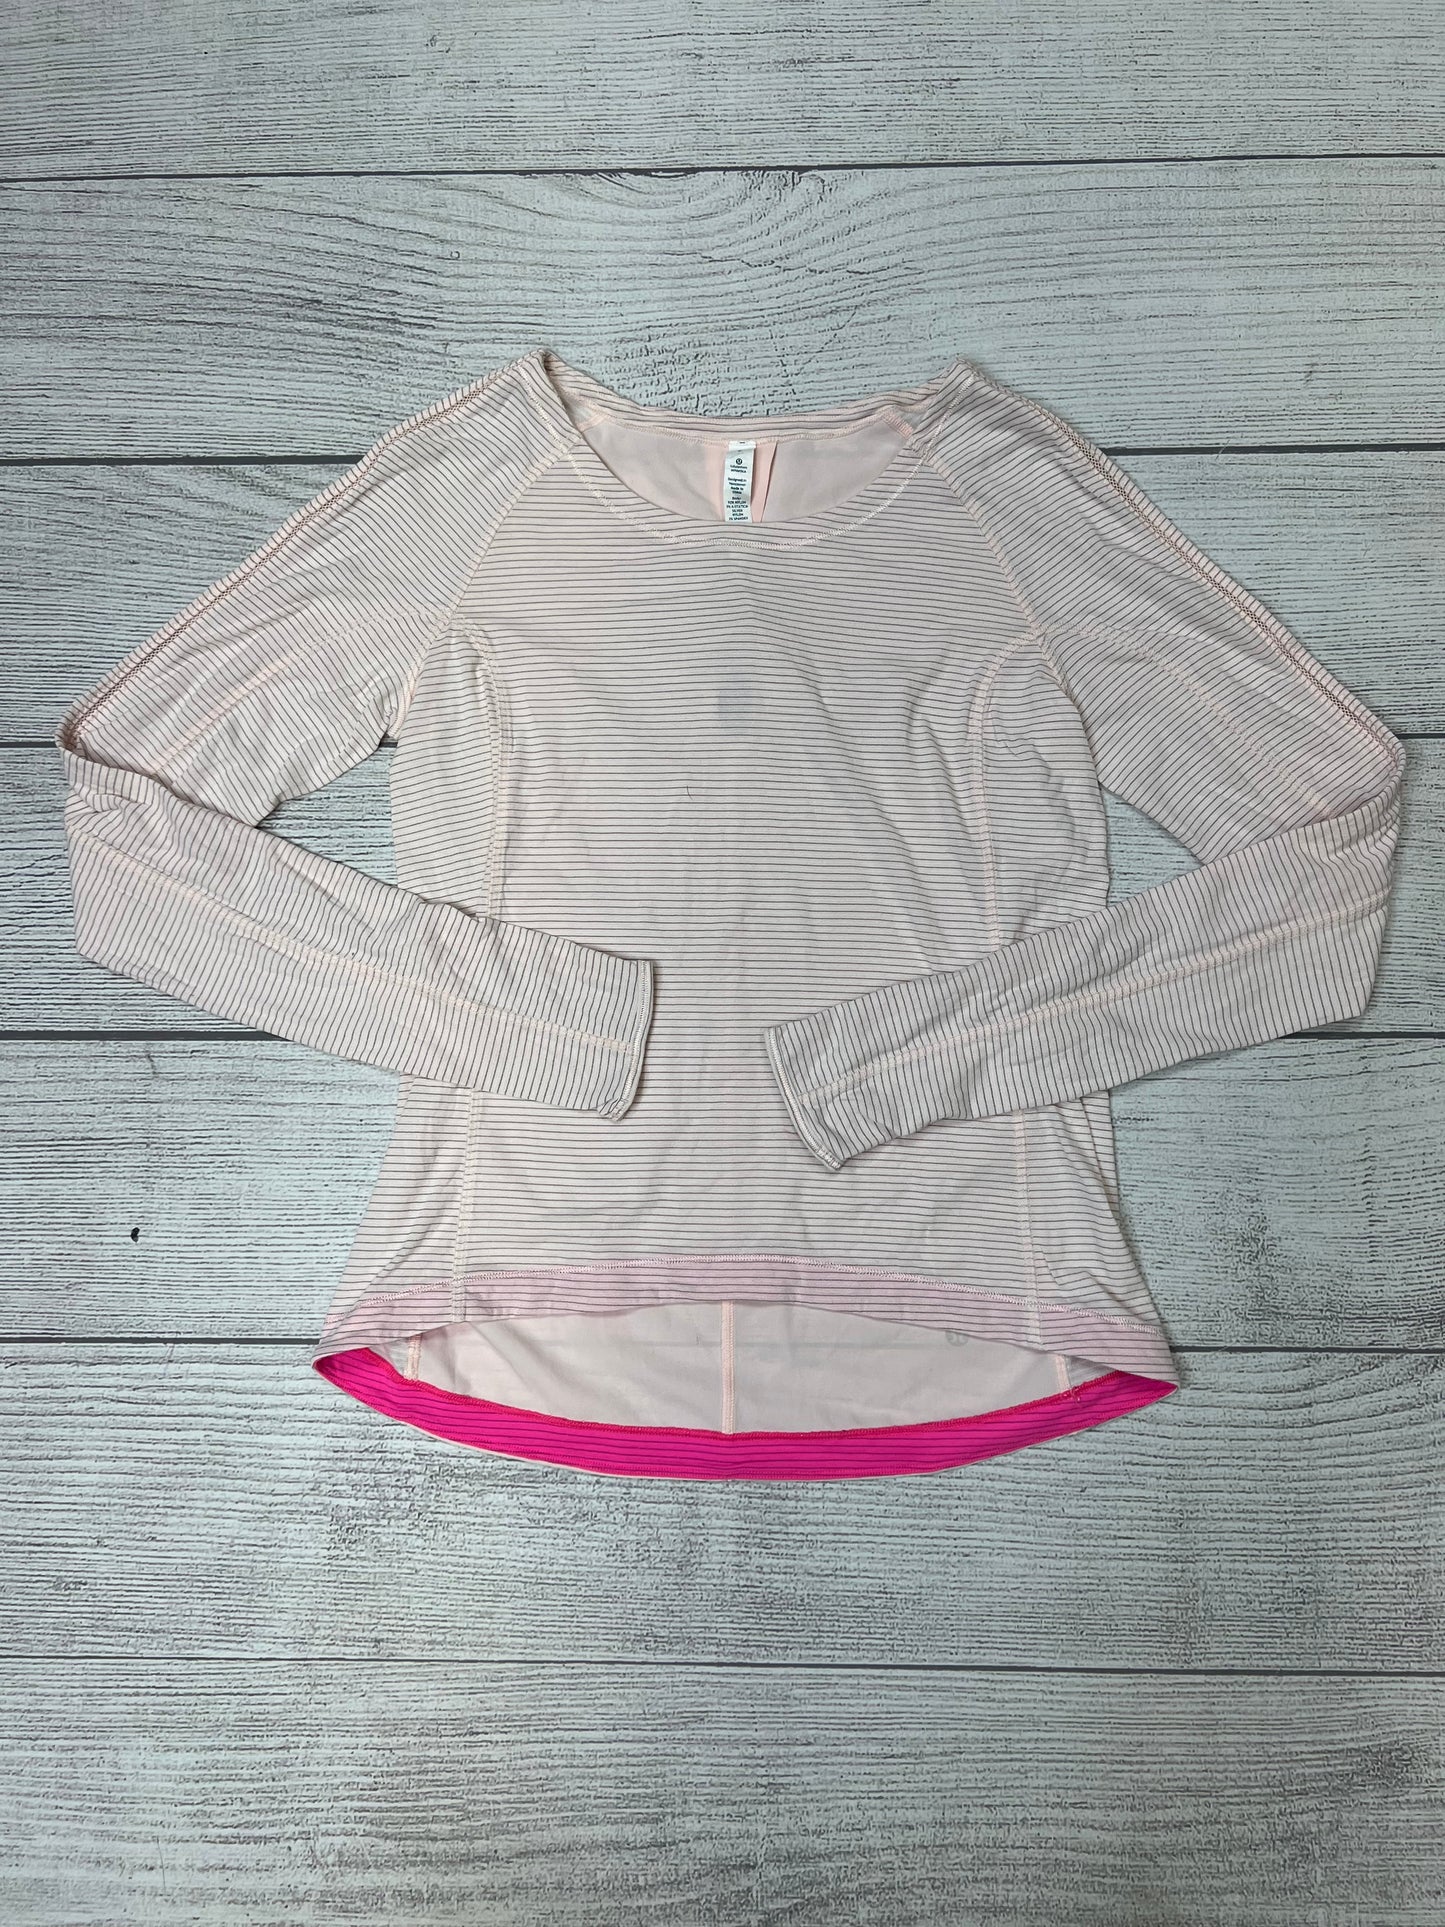 Light Pink Athletic Top Long Sleeve Crewneck Lululemon, Size S